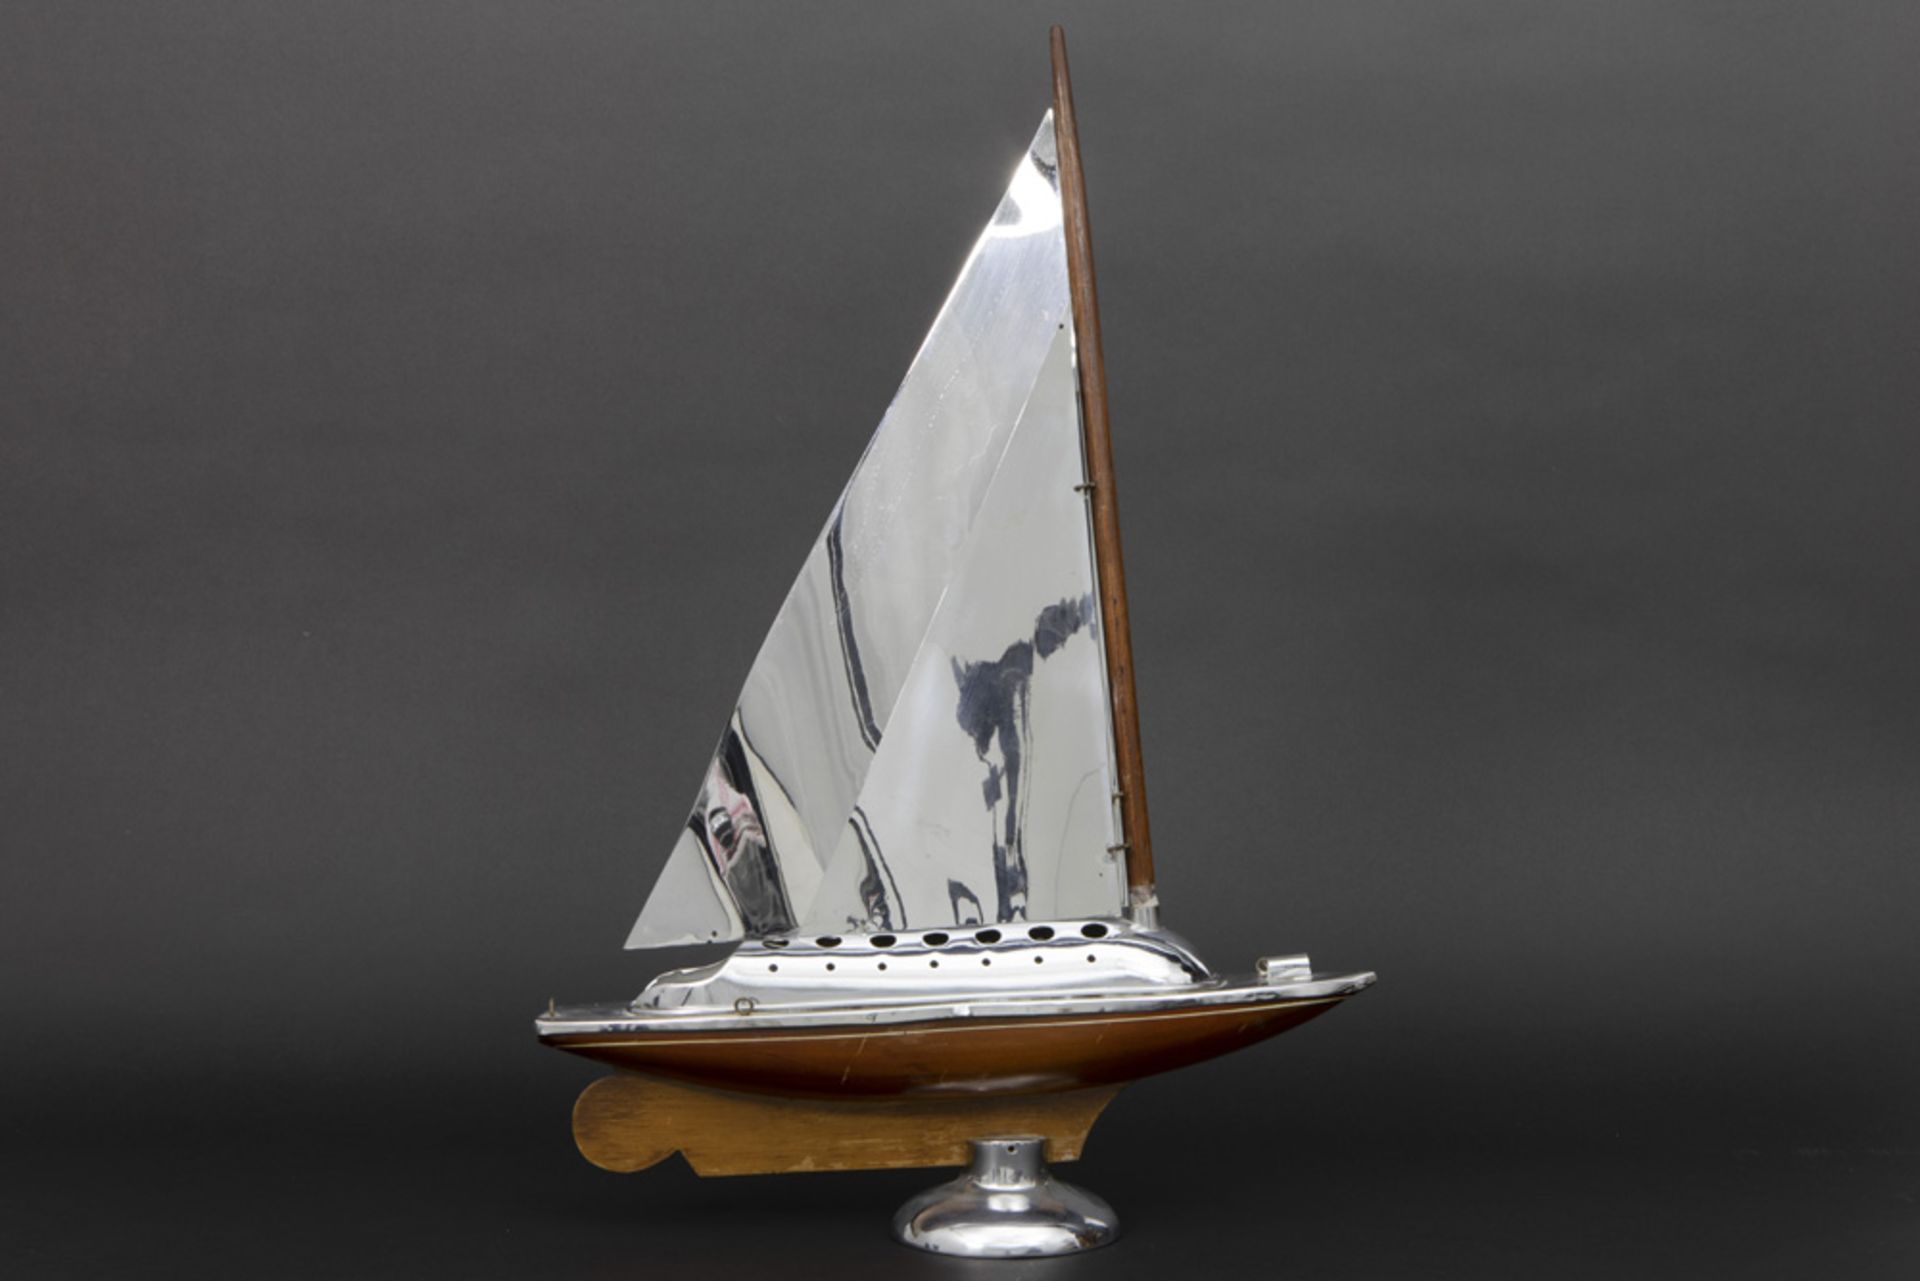 forties' incense burner in the shape of a boat in chromed metal || Forties' brûle-parfum in de